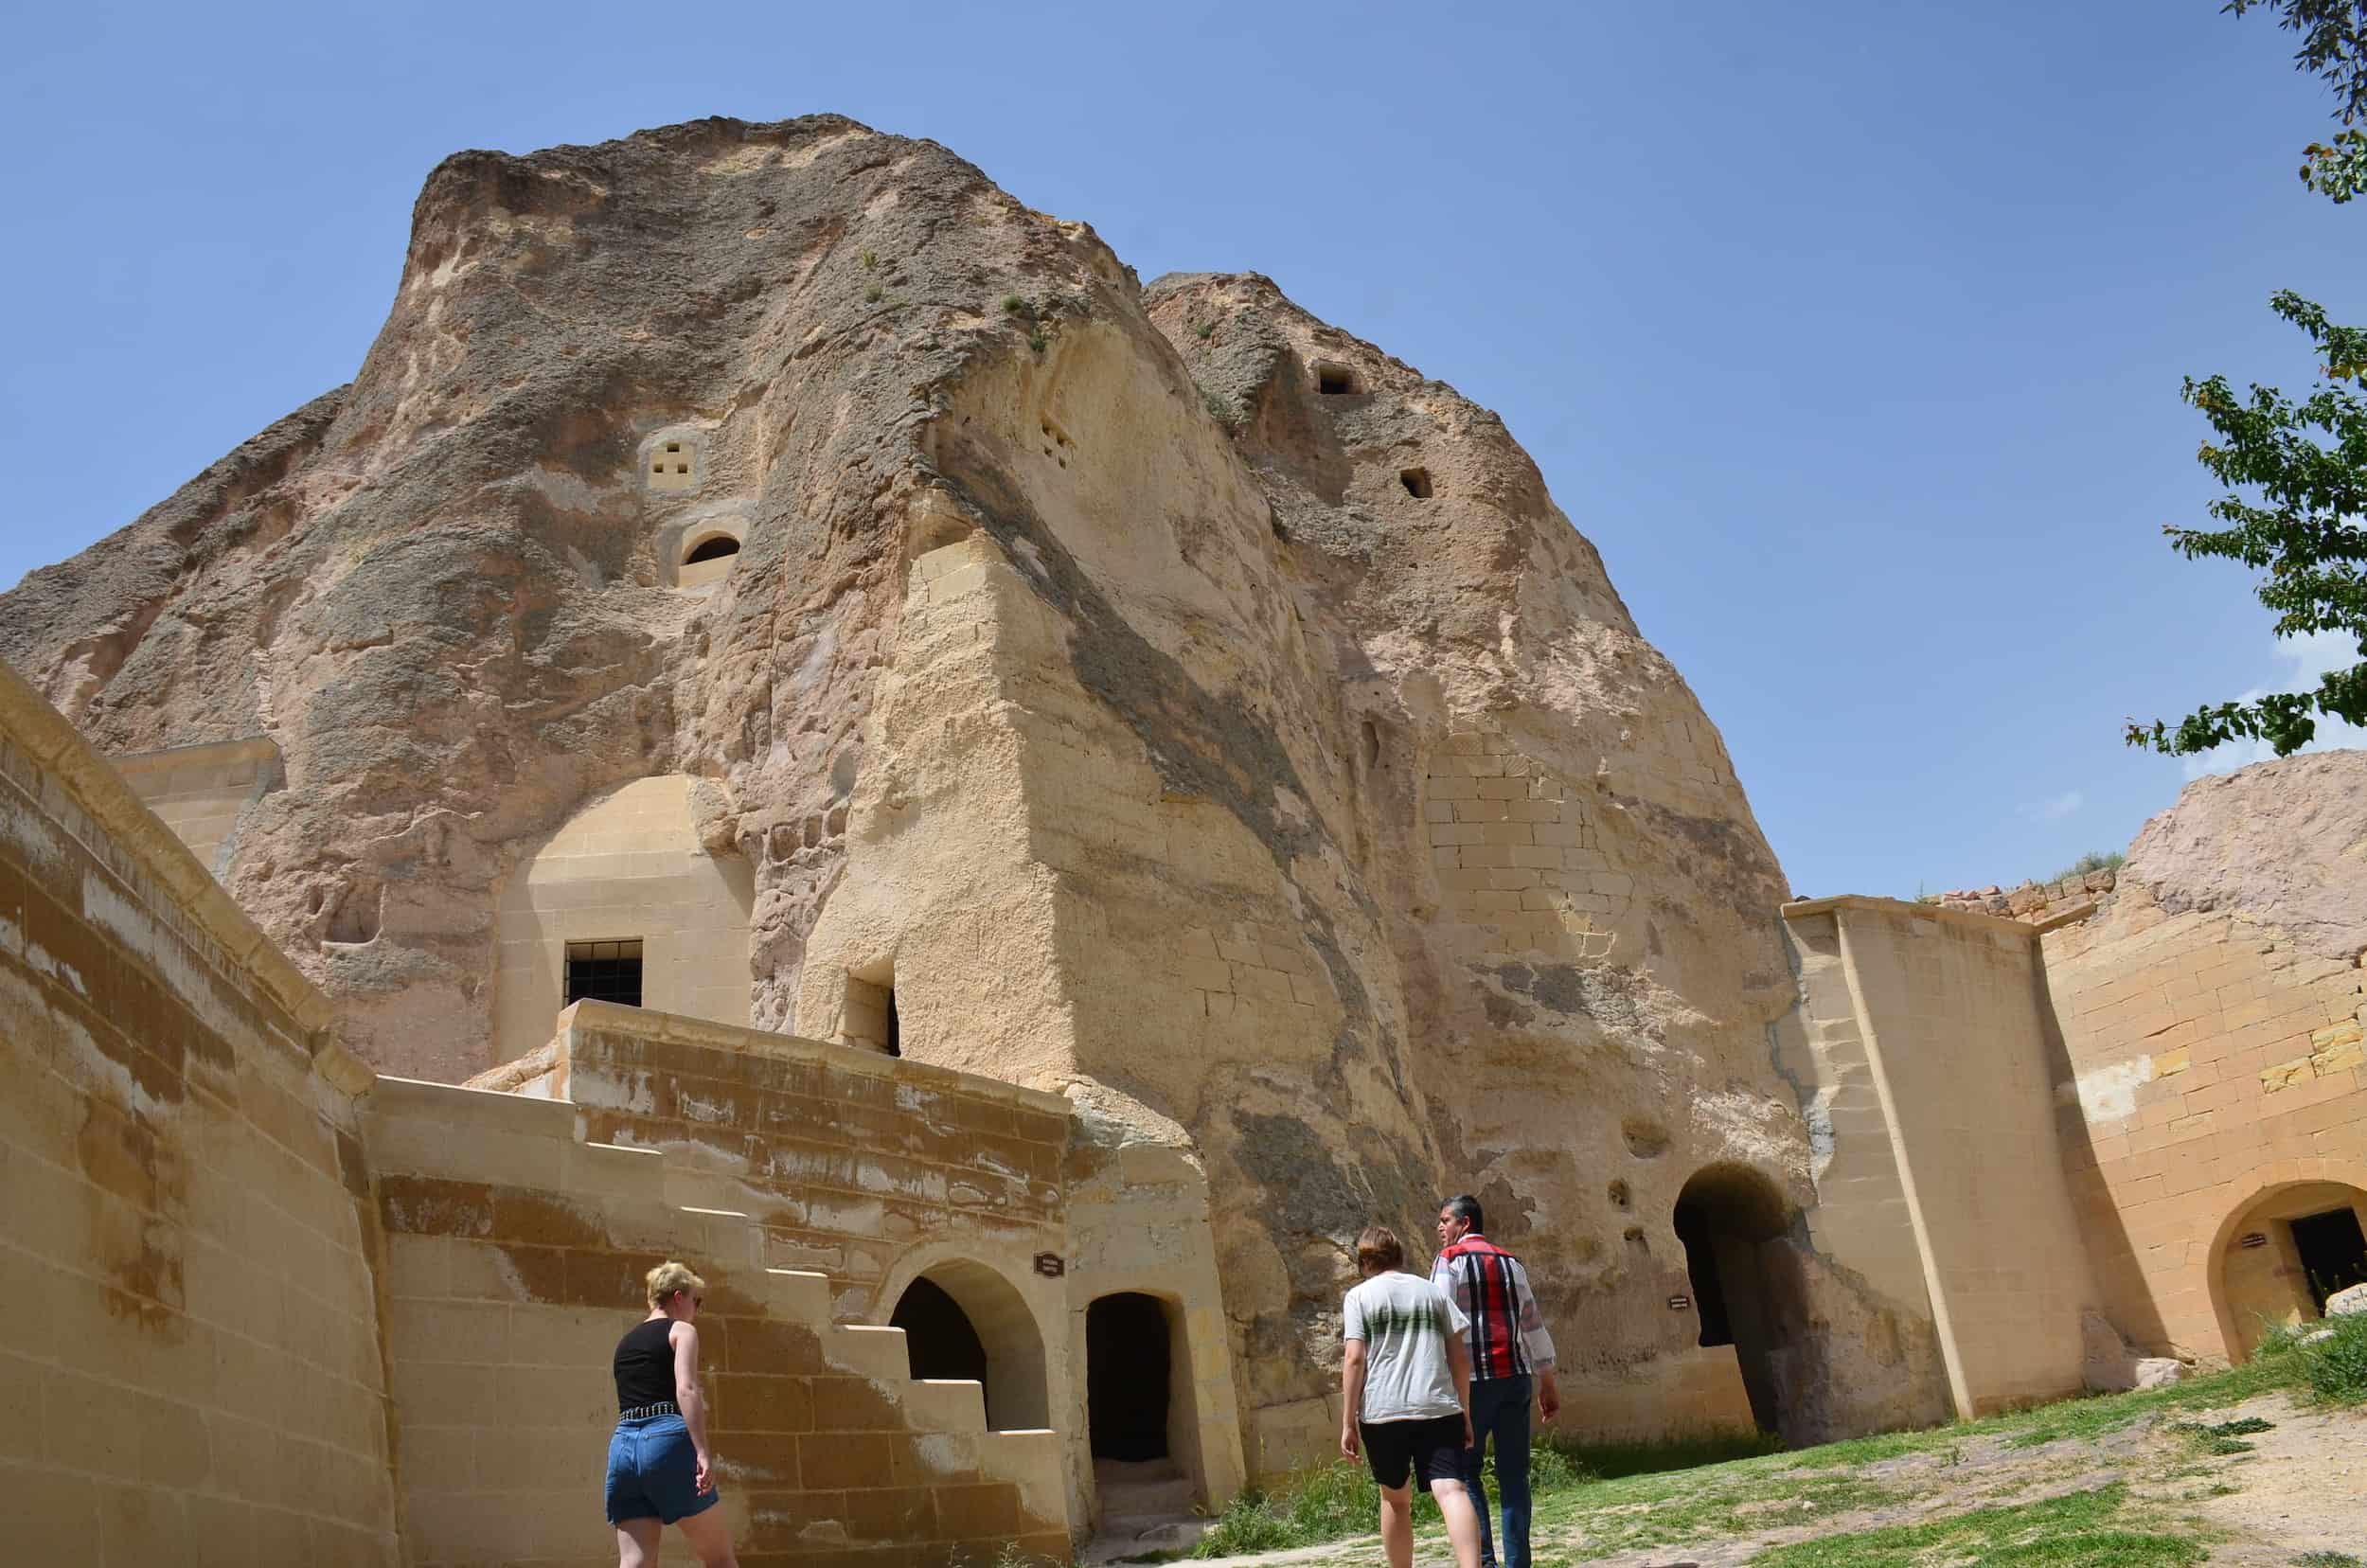 Courtyard at Keşlik Monastery in Cappadocia, Turkey